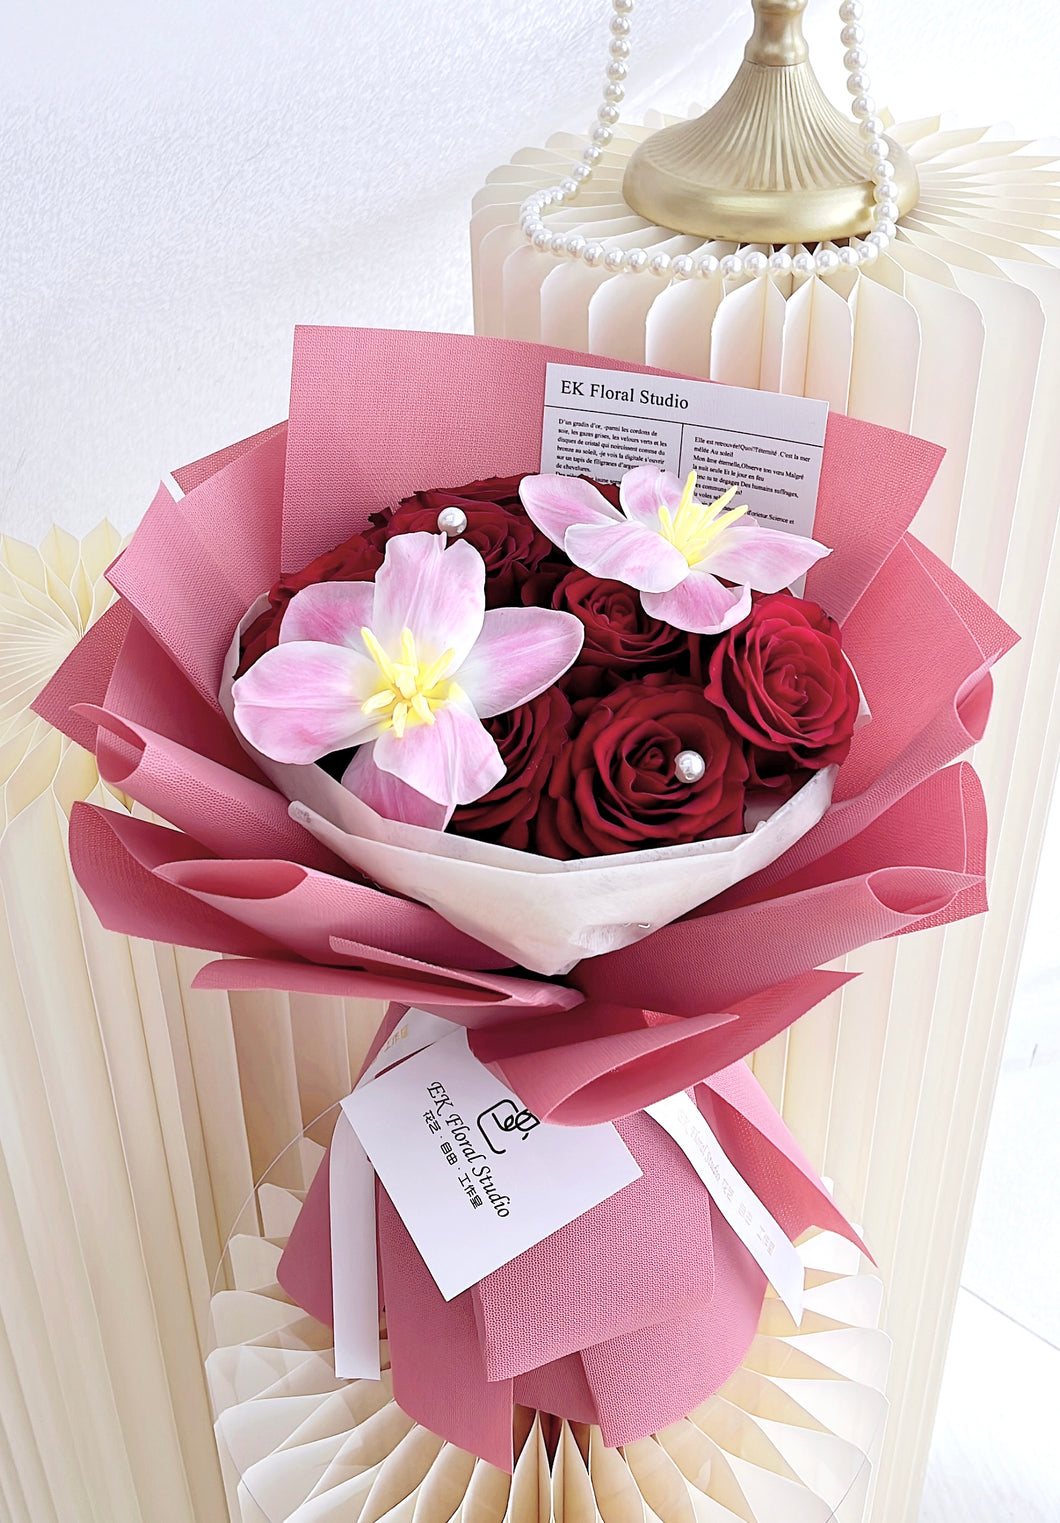 Roses with Tulip Bouquet 郁金香玫瑰花束